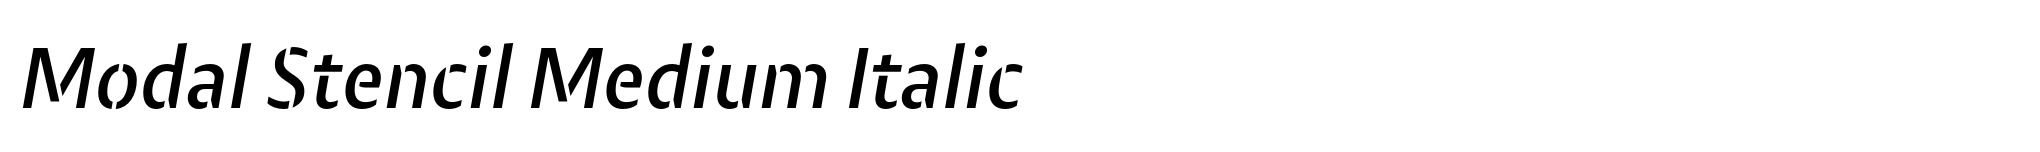 Modal Stencil Medium Italic image